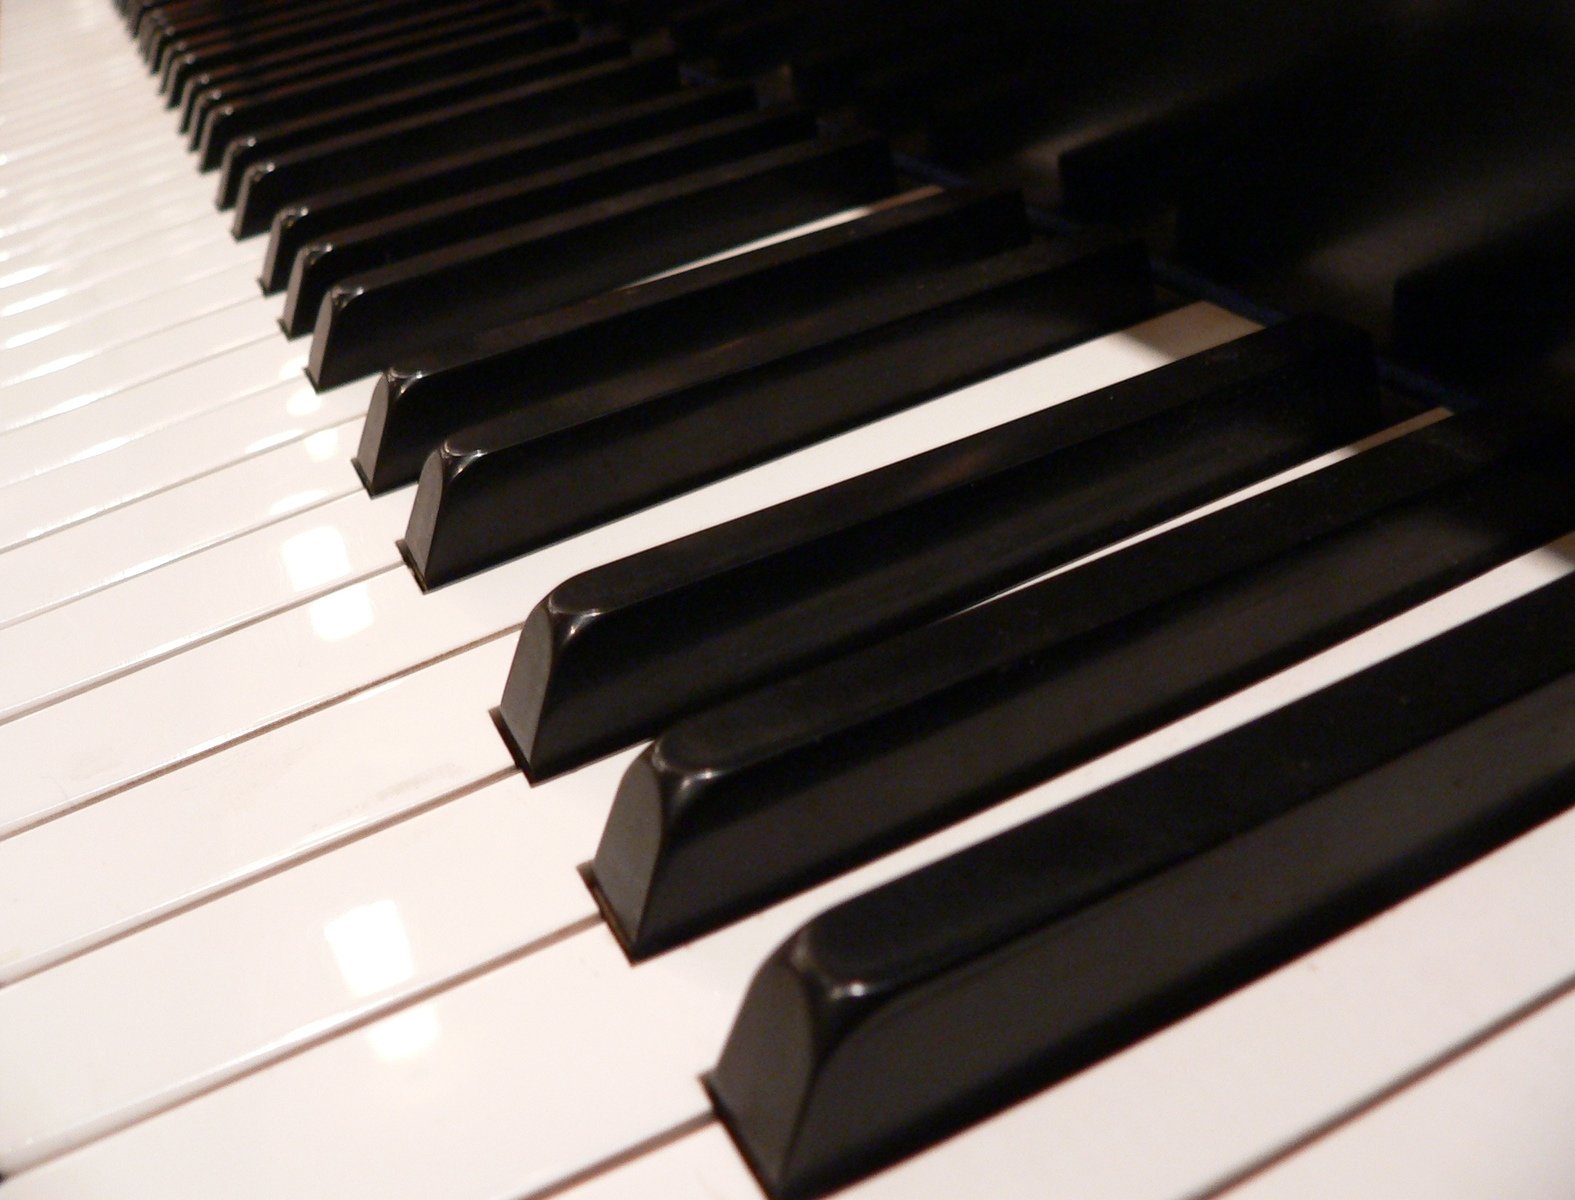 a closeup s of a piano keyboard